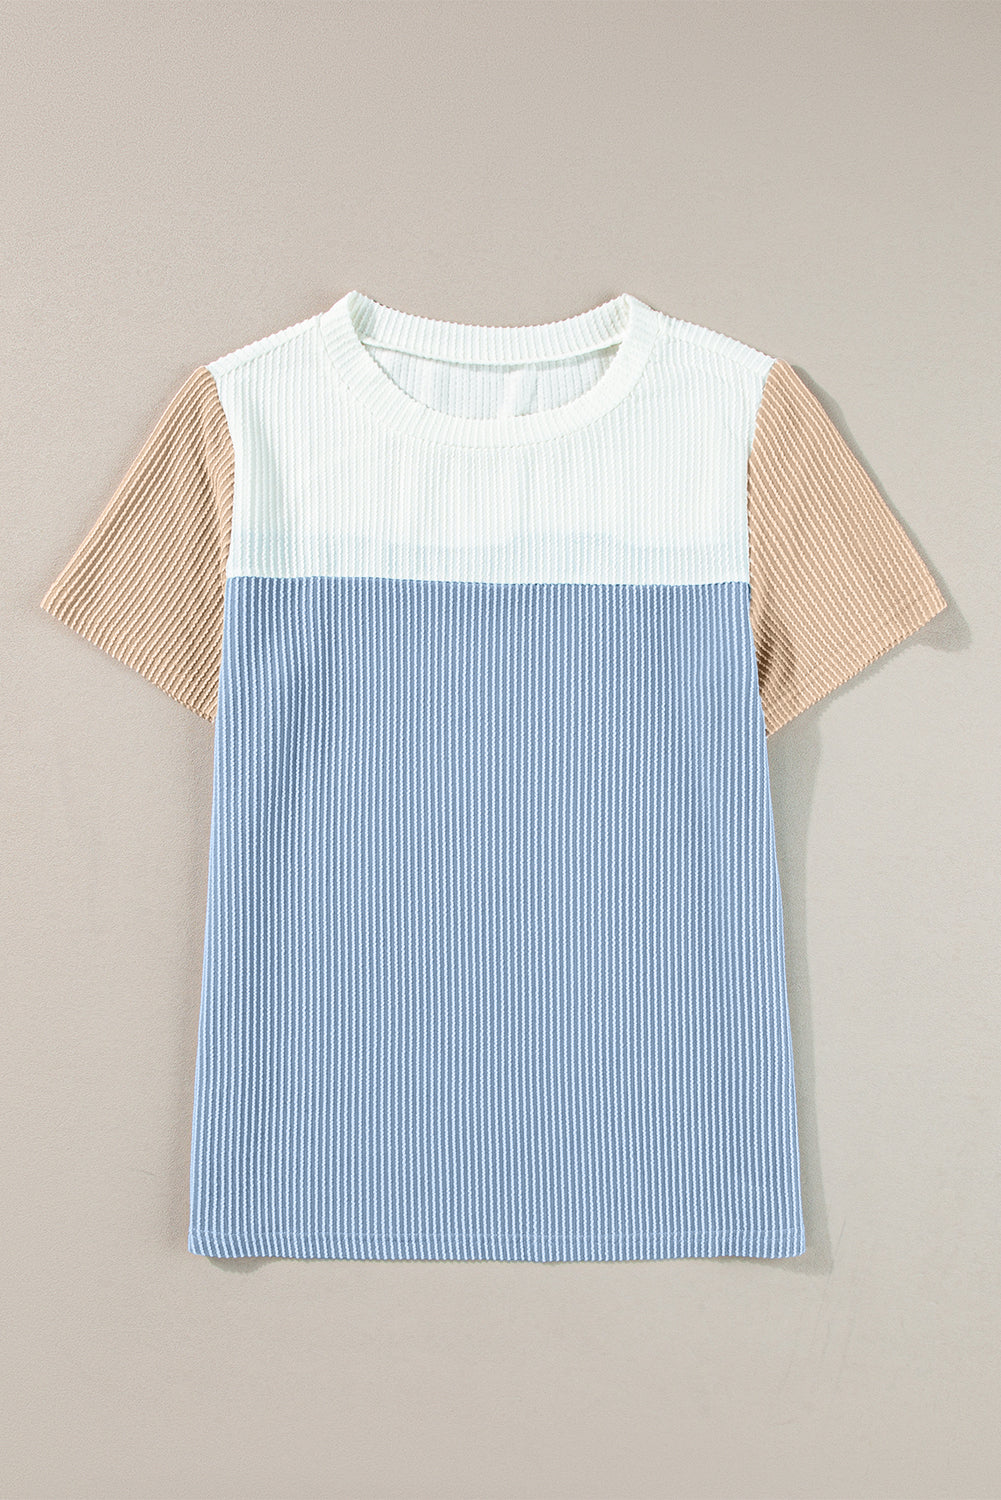 Light Blue Rib Textured Colorblock T Shirt